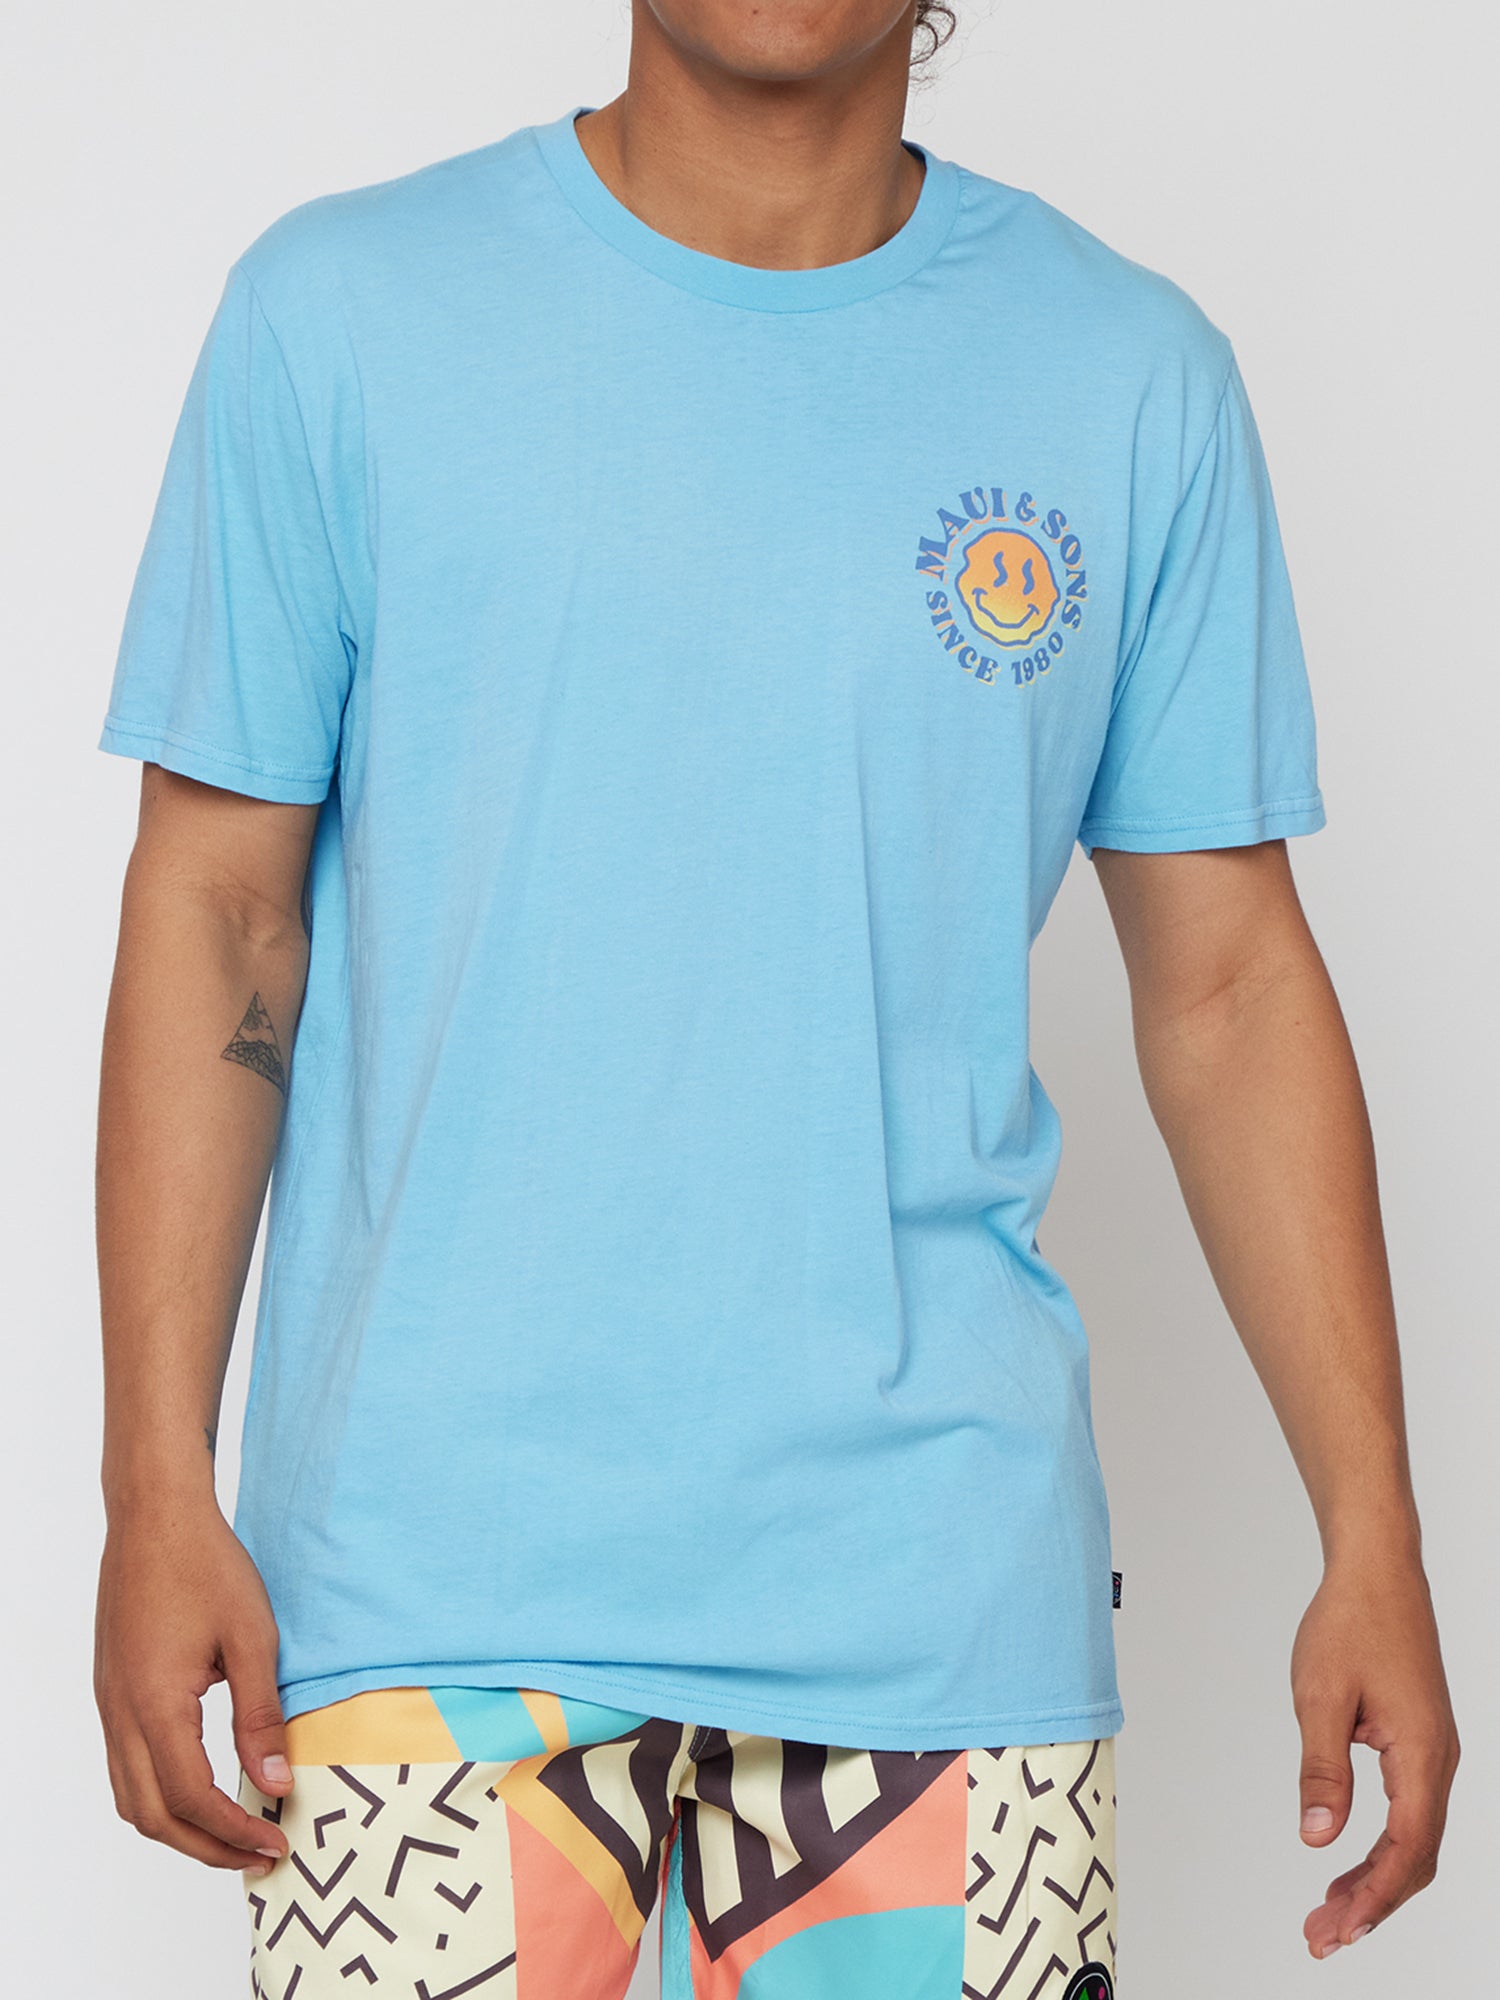 OG Surf T-Shirt in Sky Blue